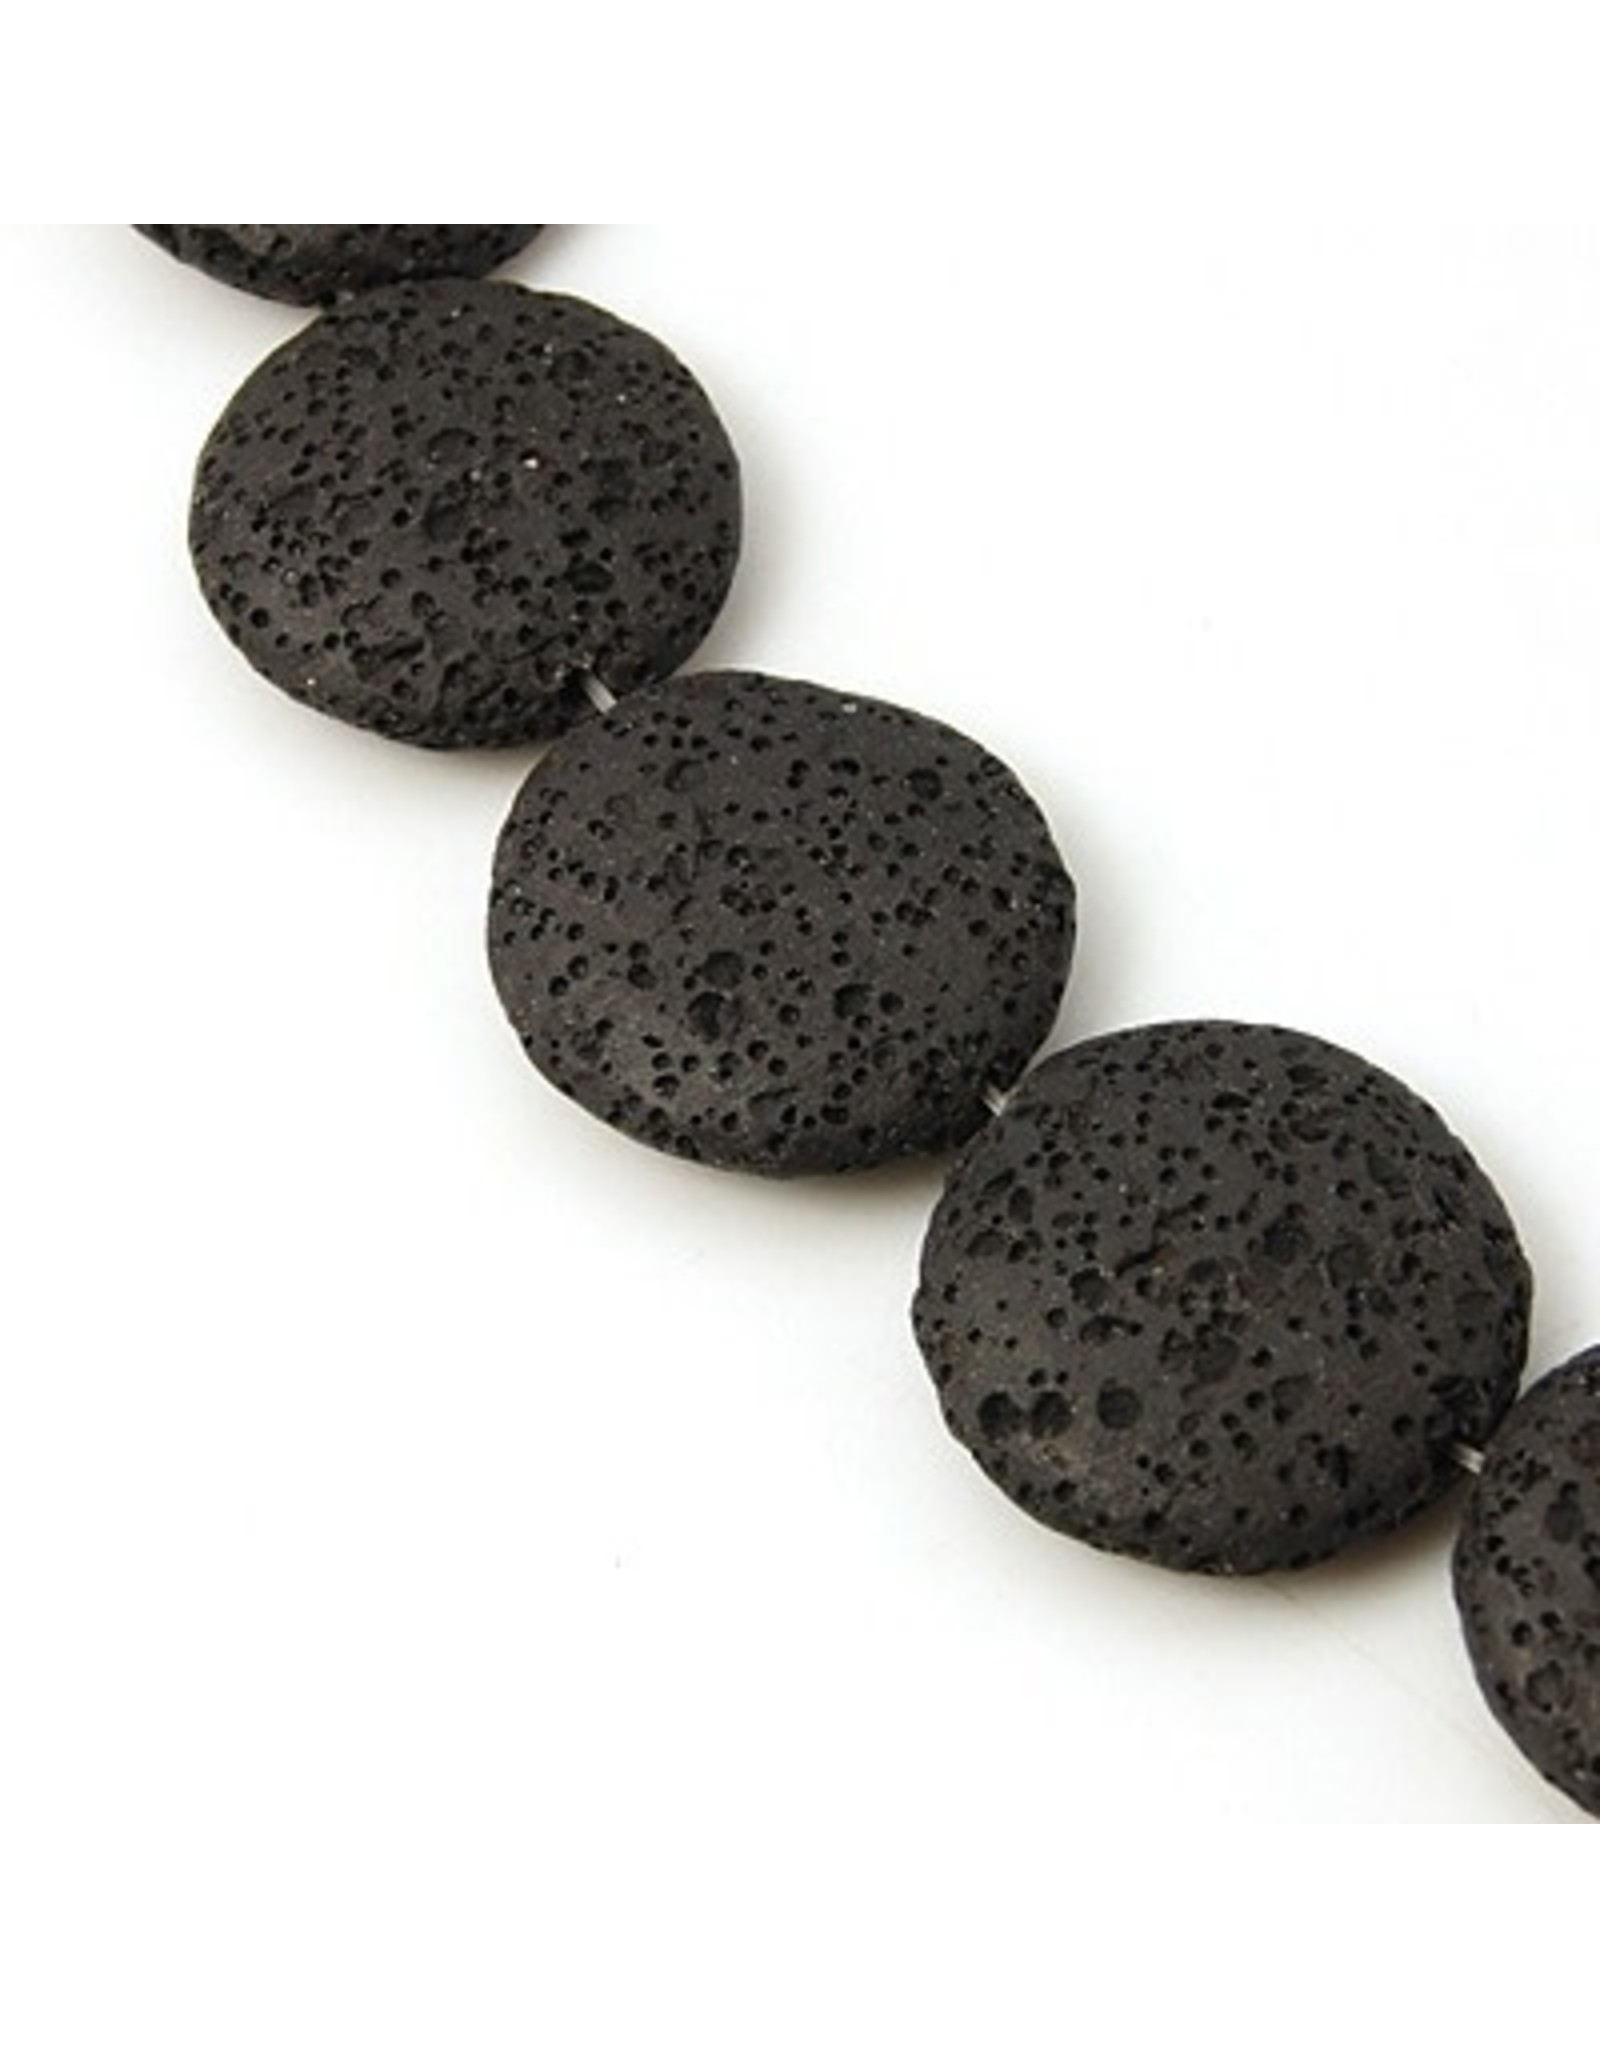 Lava 20mm Flat Round  Black  15" Strand  apprx  x18 beads